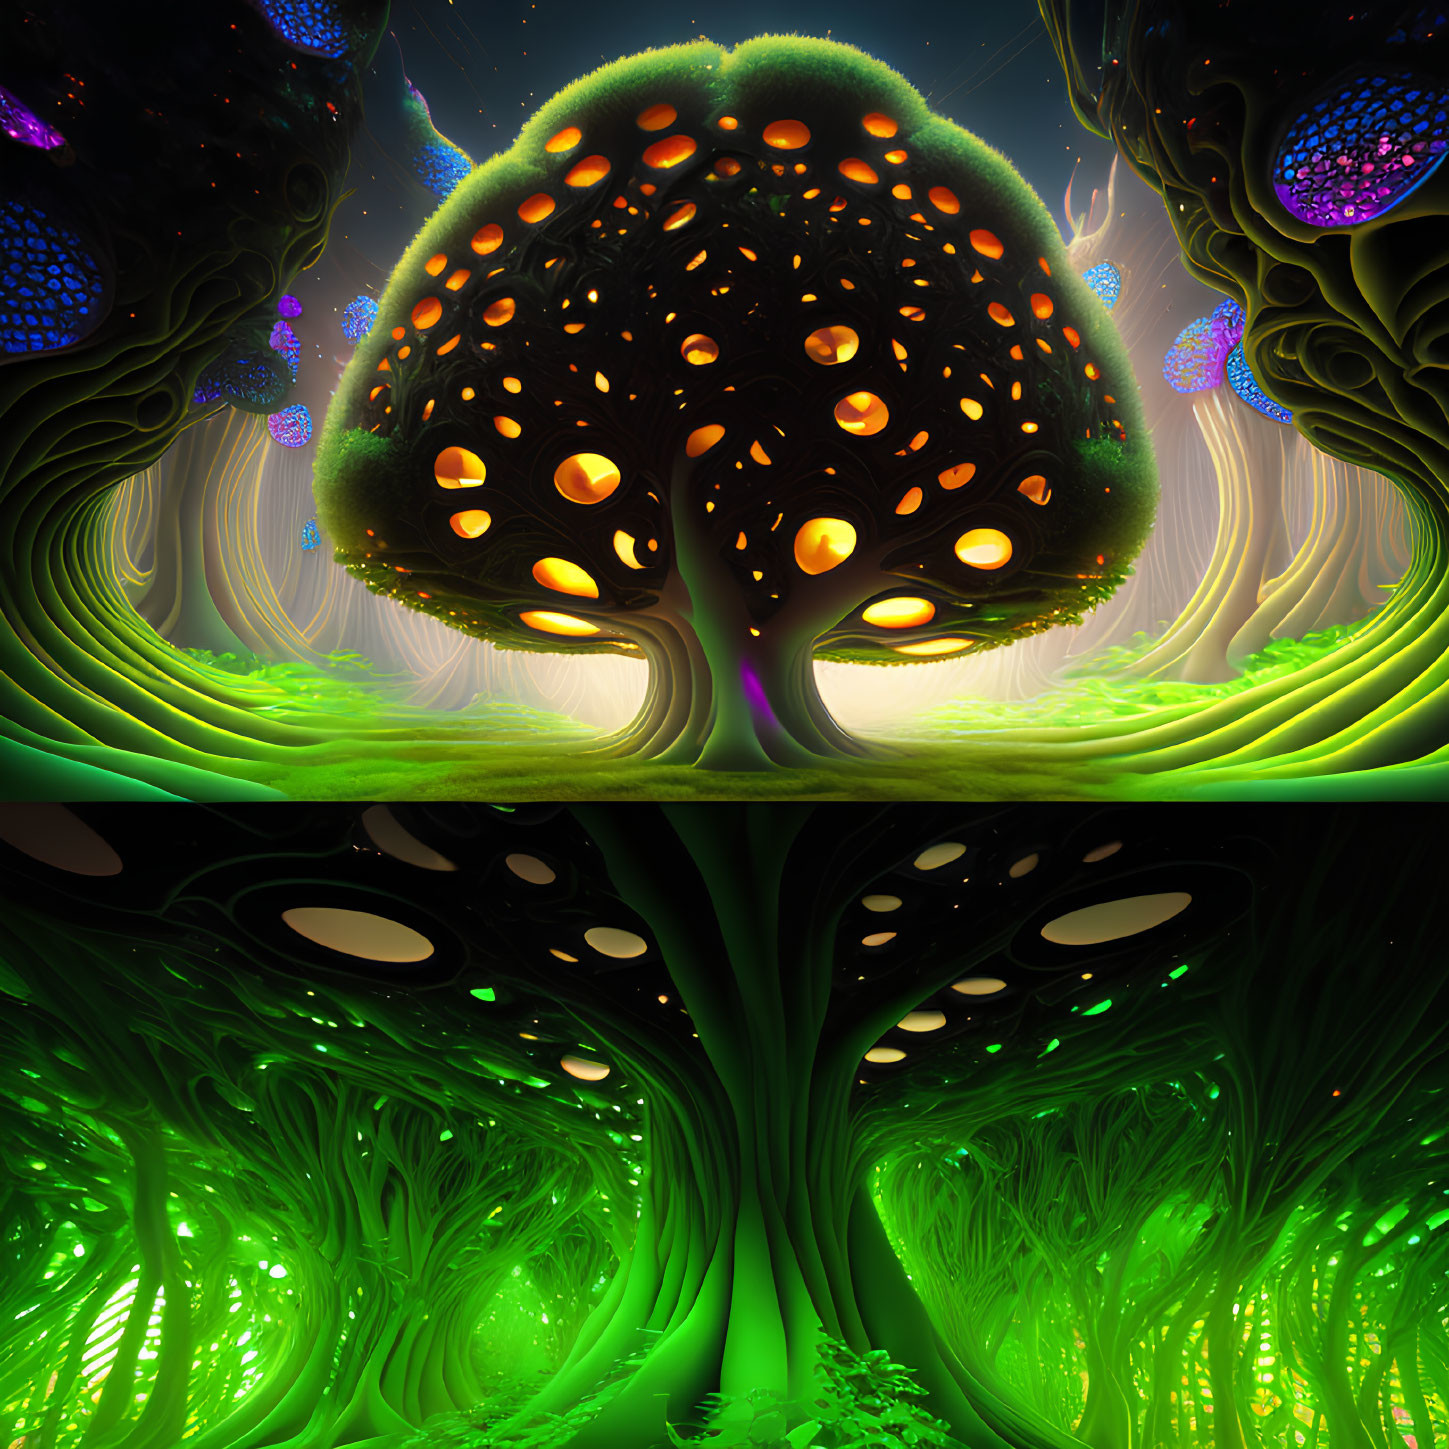 Symmetrical fantasy trees in vibrant digital artwork